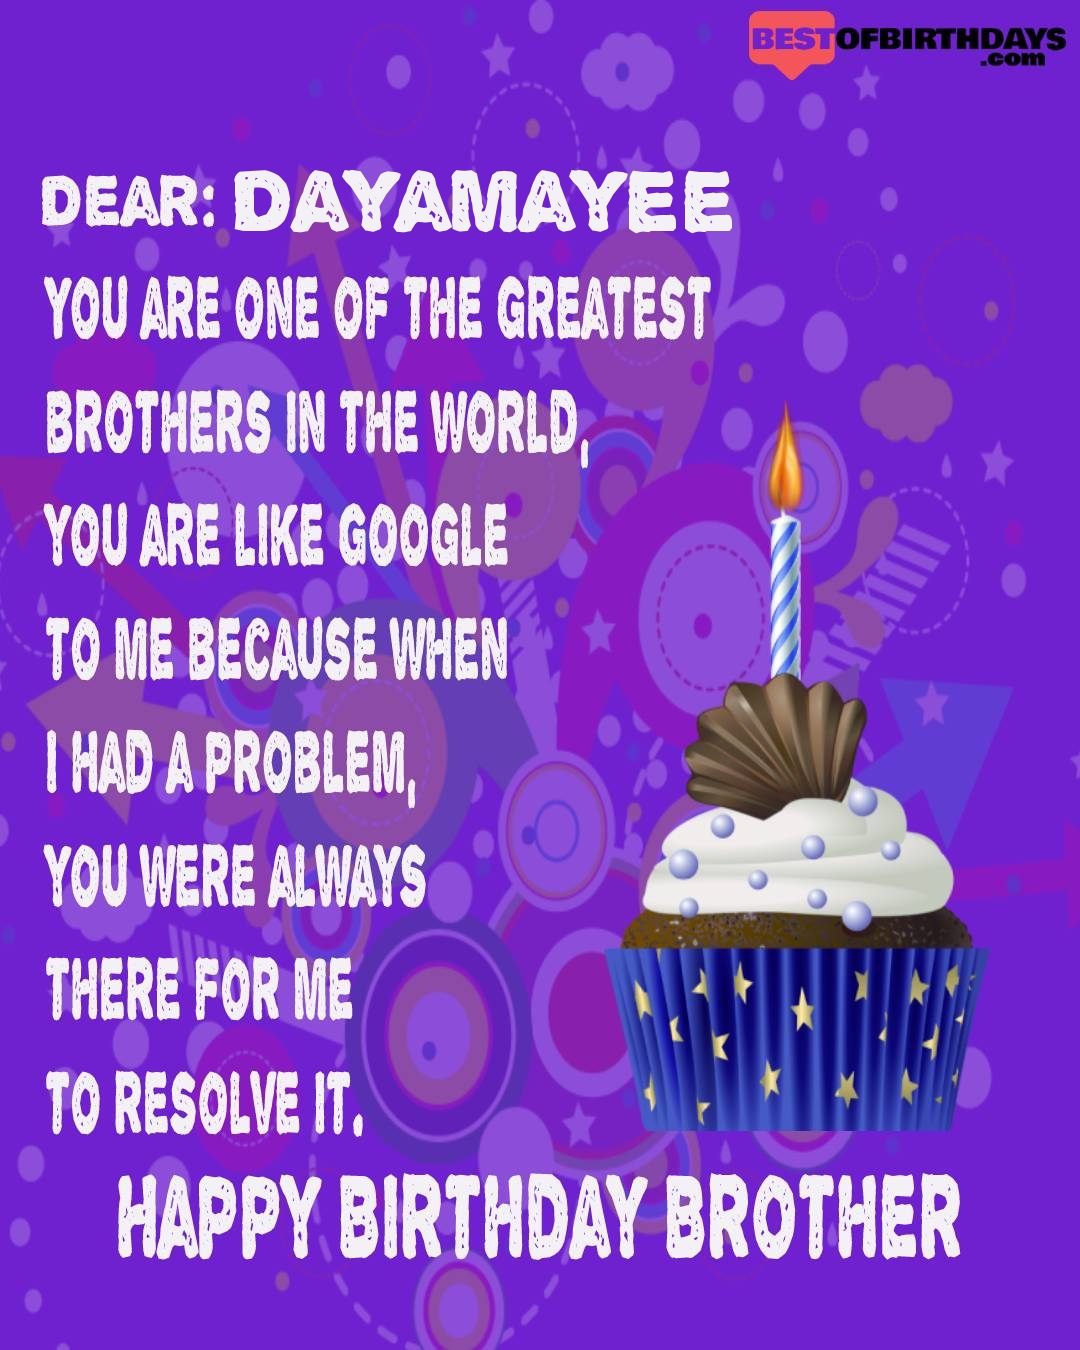 Happy birthday dayamayee bhai brother bro